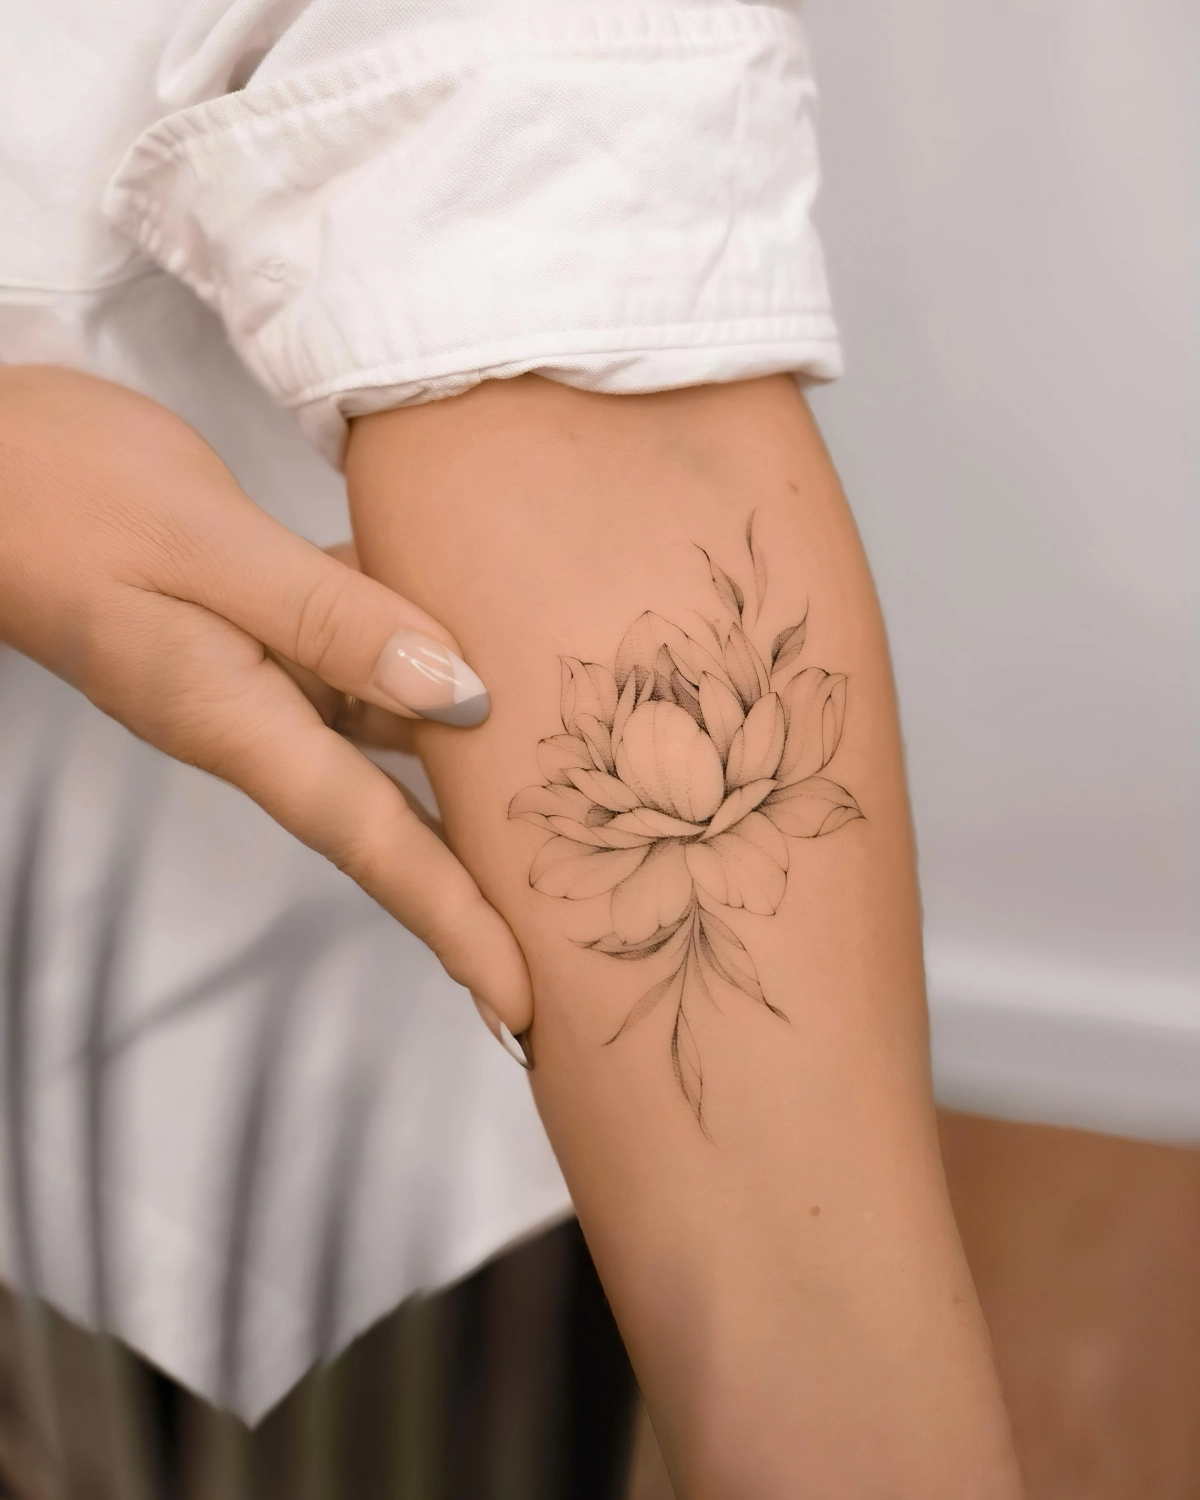 chemise blanche nail art ongles french blanc gris tatouage fleur de lotus realiste